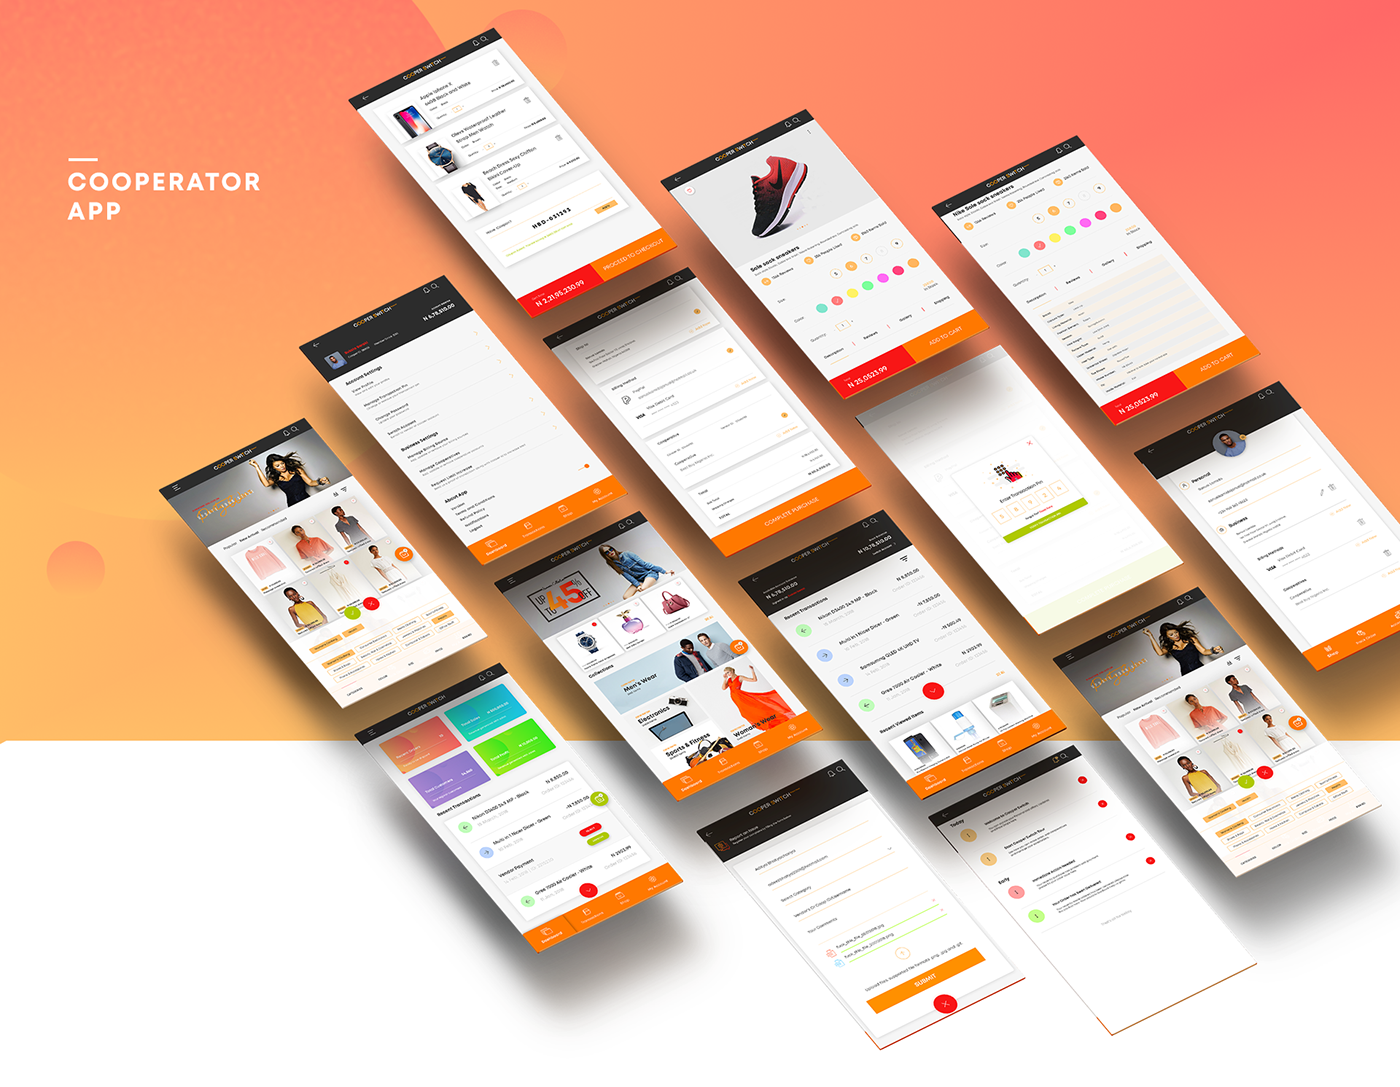 UI ux redesign websitedesign androidappdesign iosappdesign Appdesign creativedesign ecommercedesign eCommerceapp